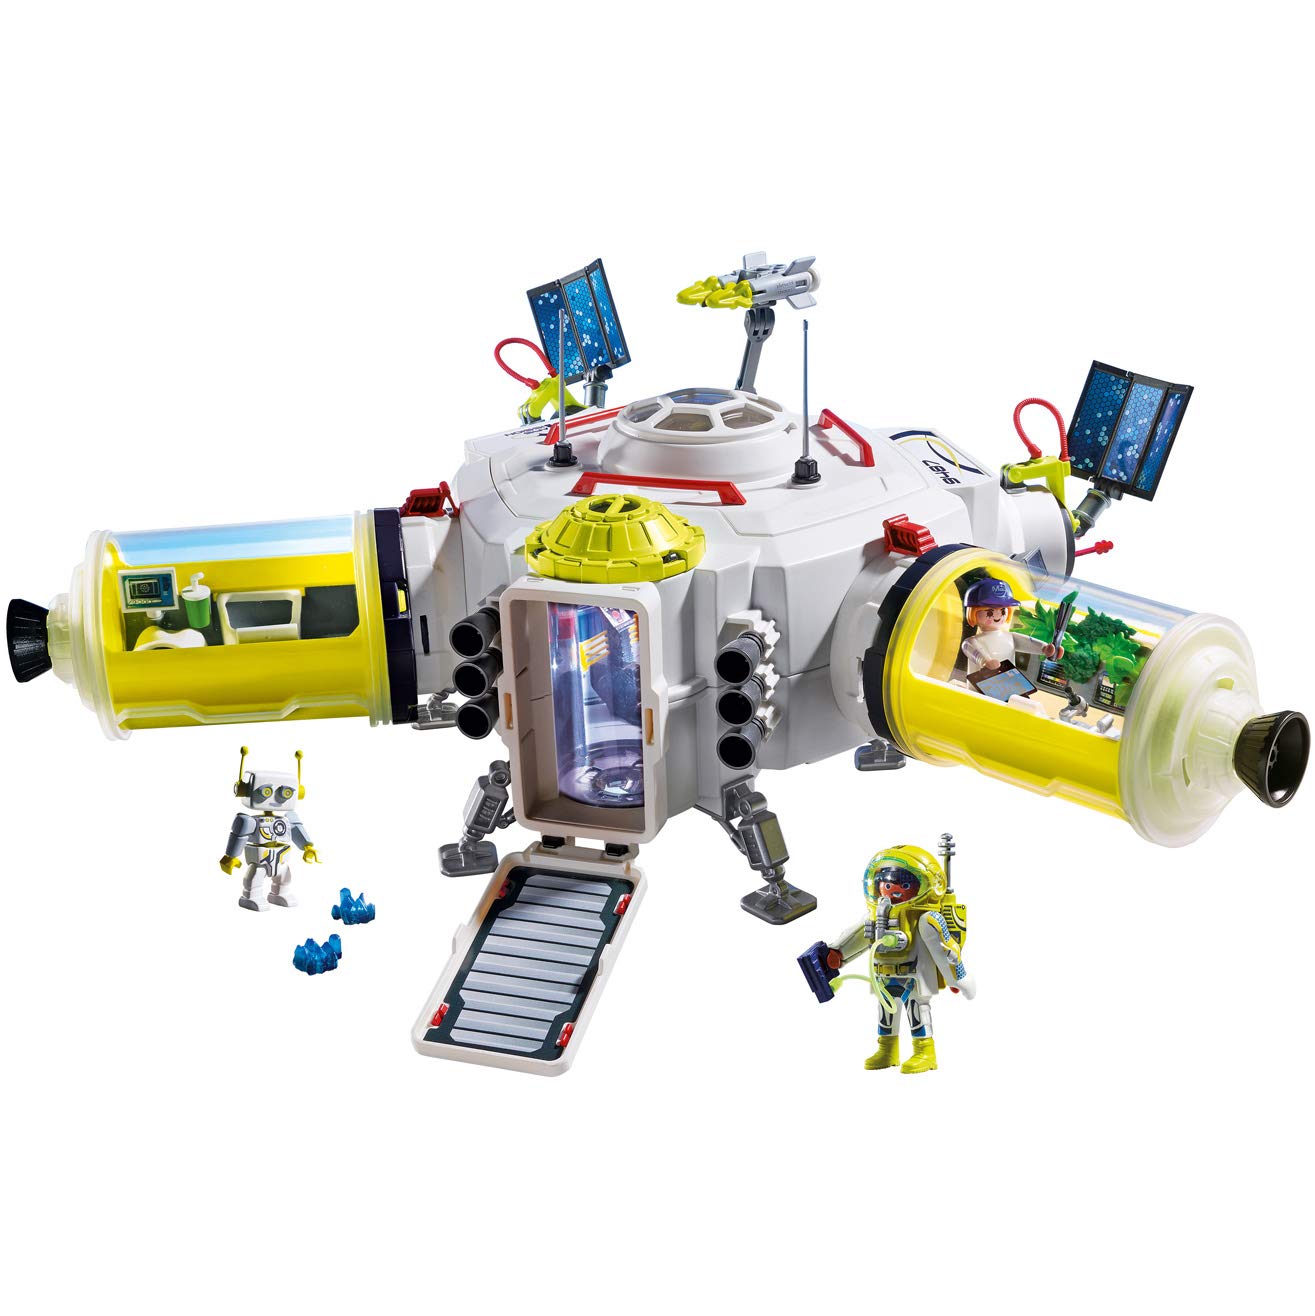 Playmobil Toy Mars Station